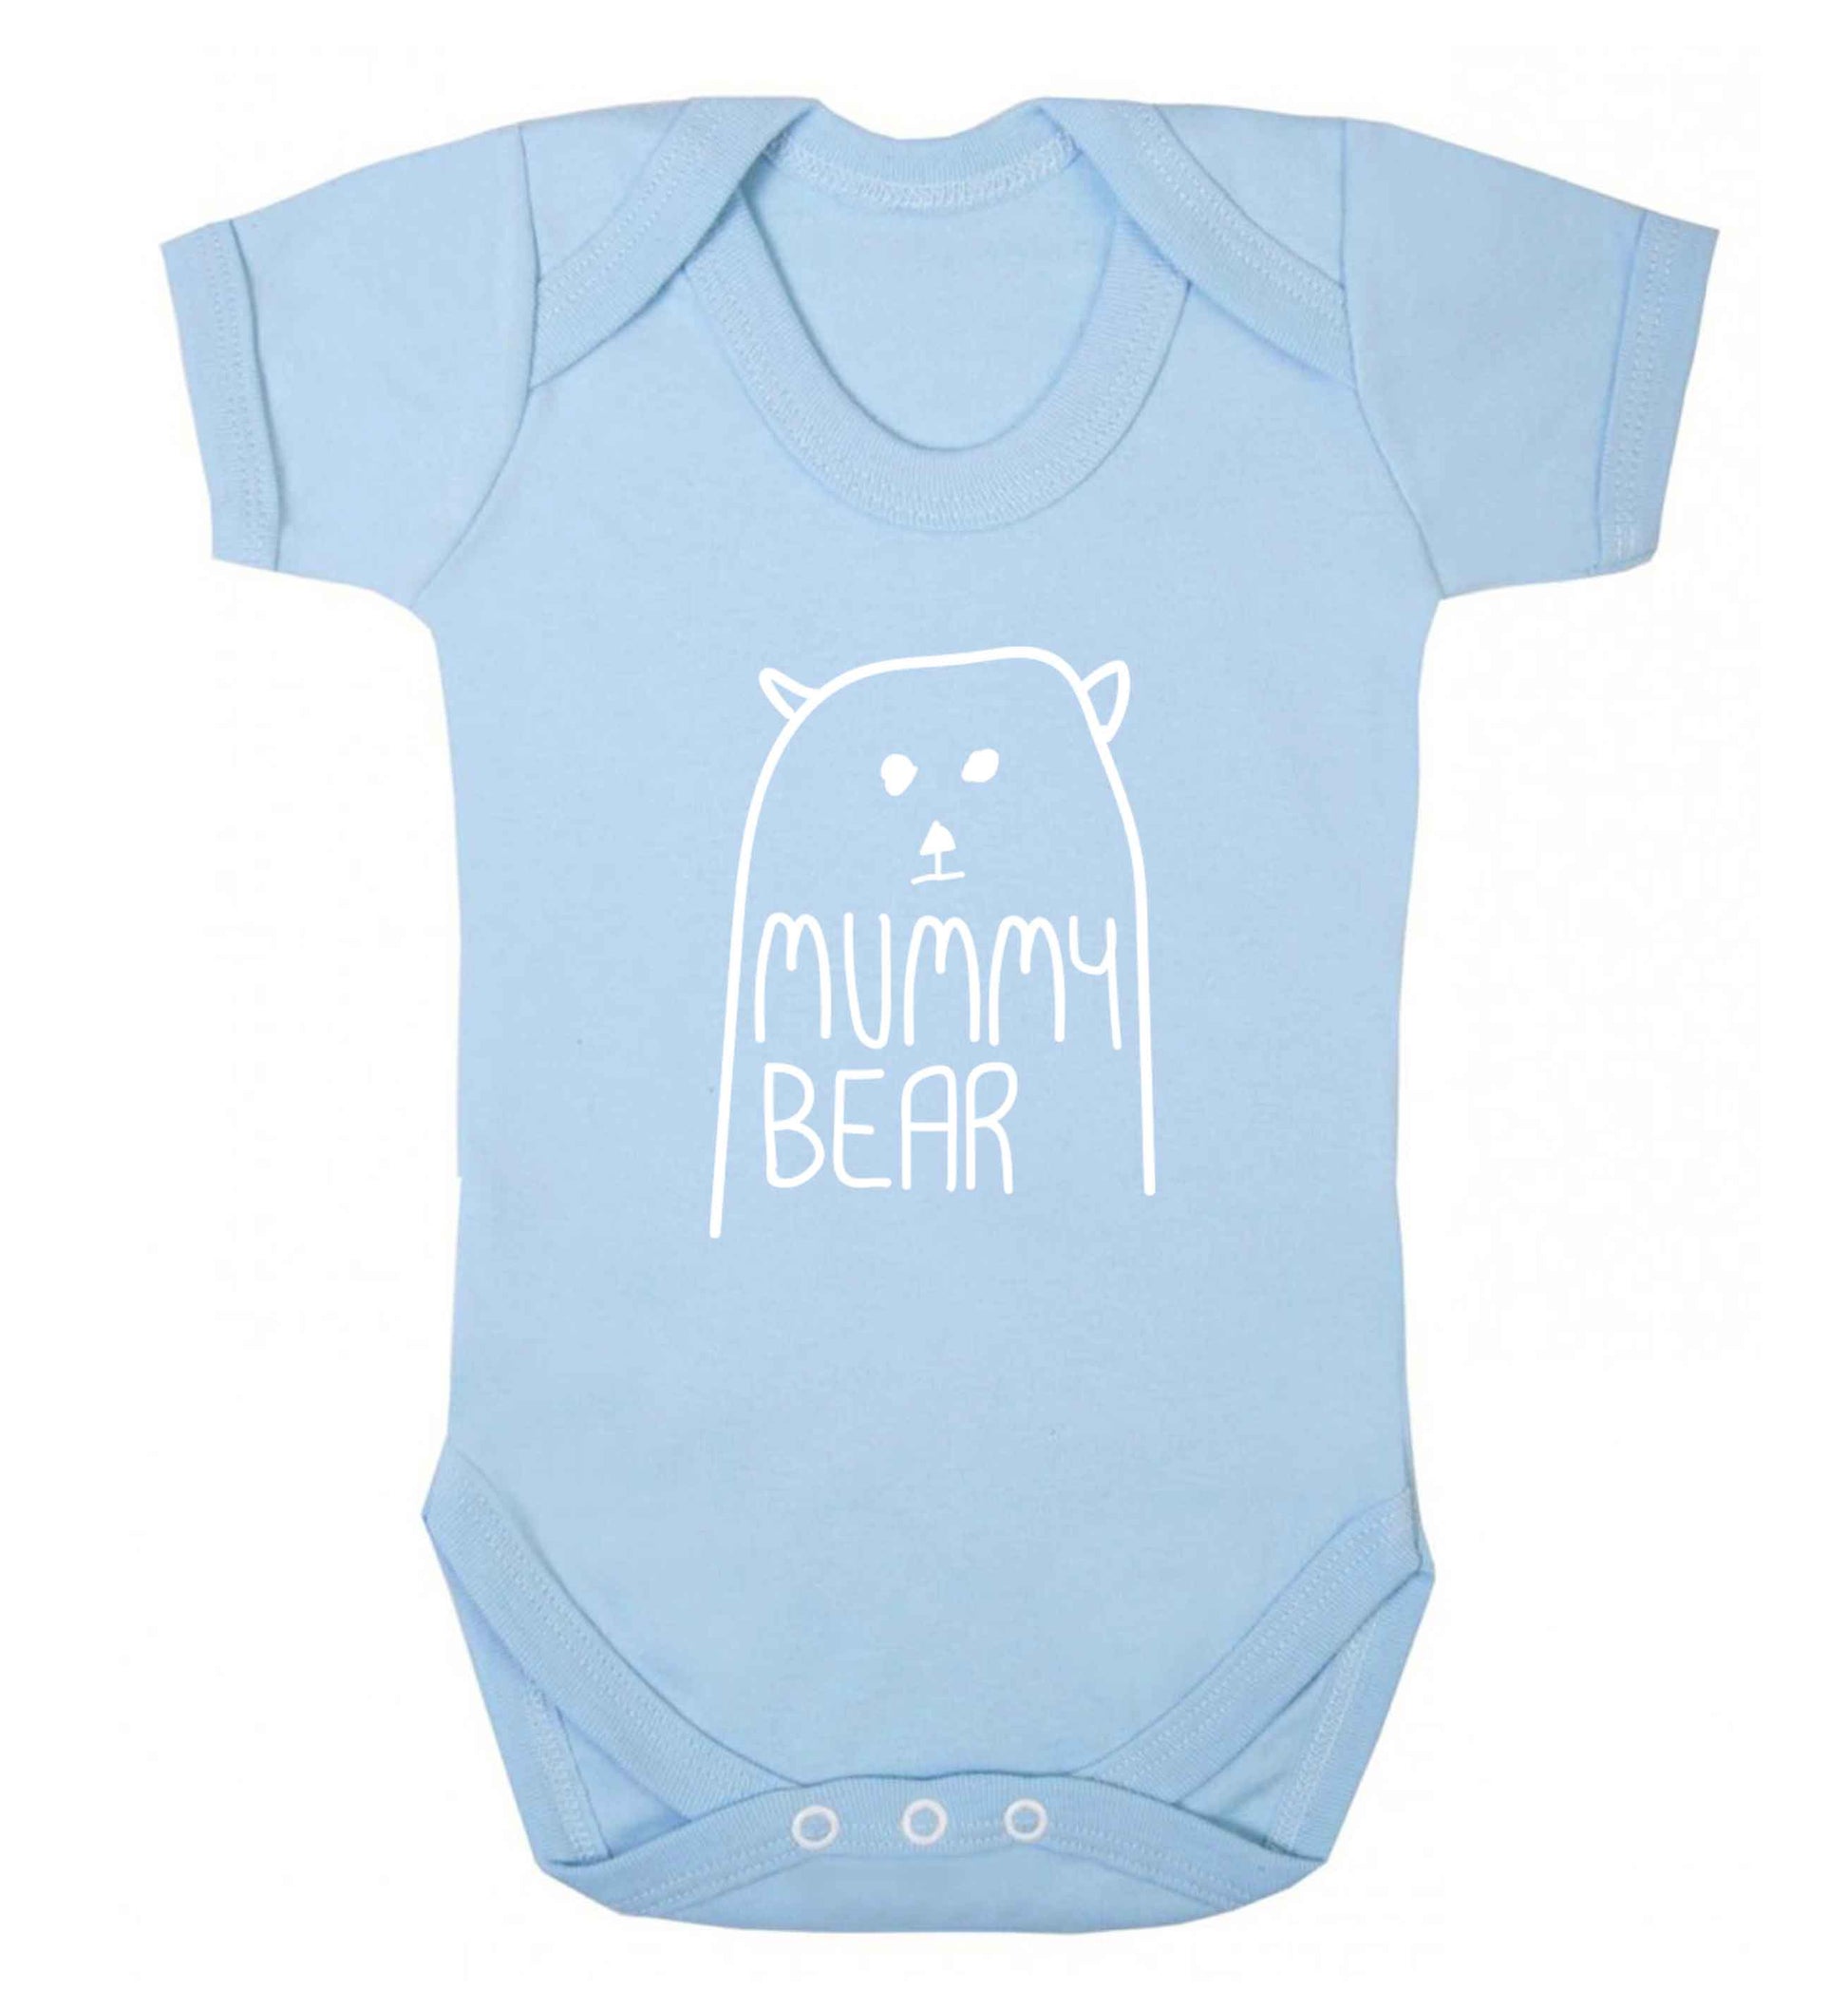 Mummy bear baby vest pale blue 18-24 months